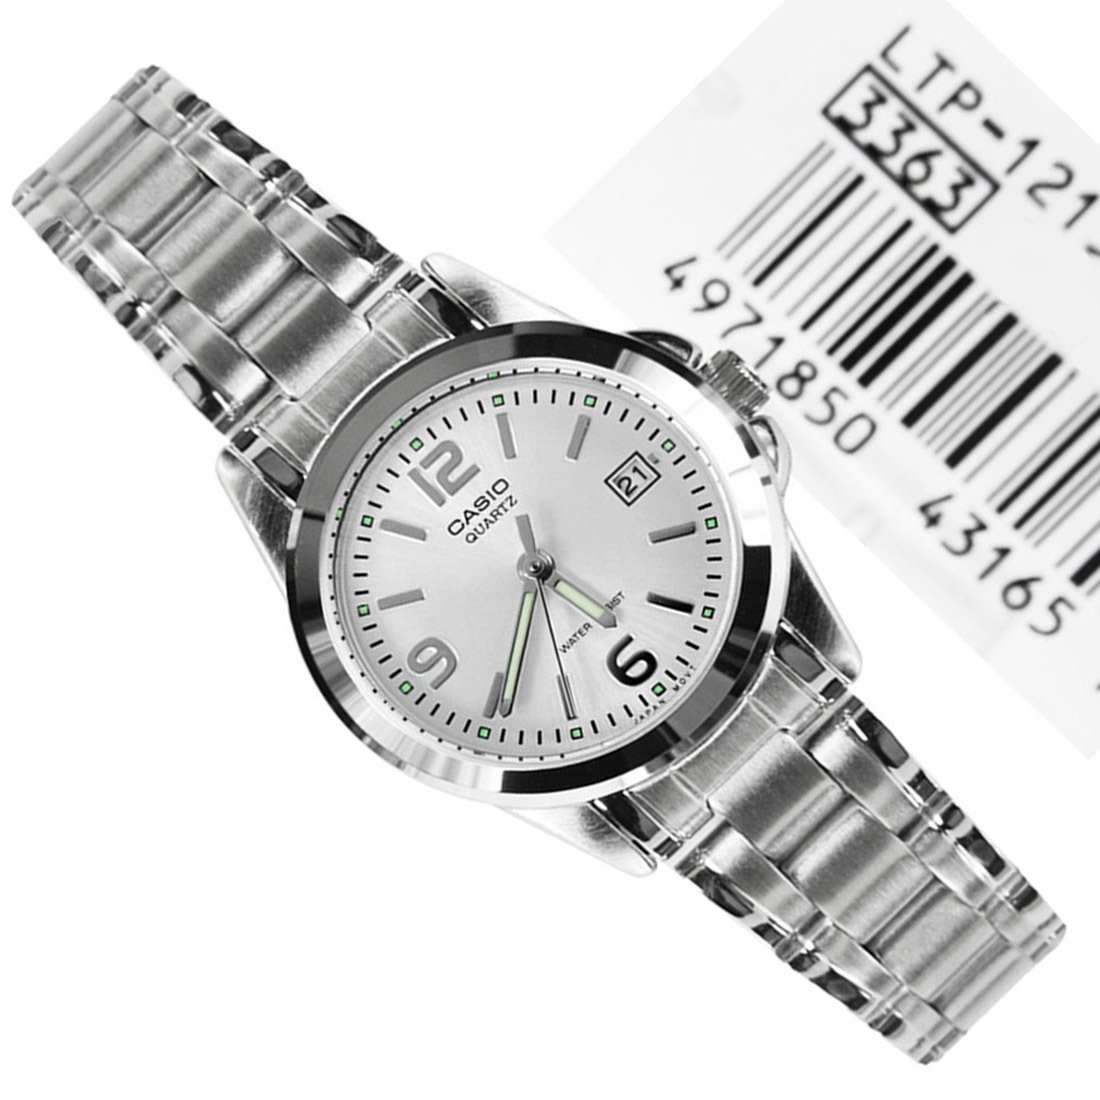 Casio Vintage LTP-1215A-7A Silver Watch for Women-Watch Portal Philippines